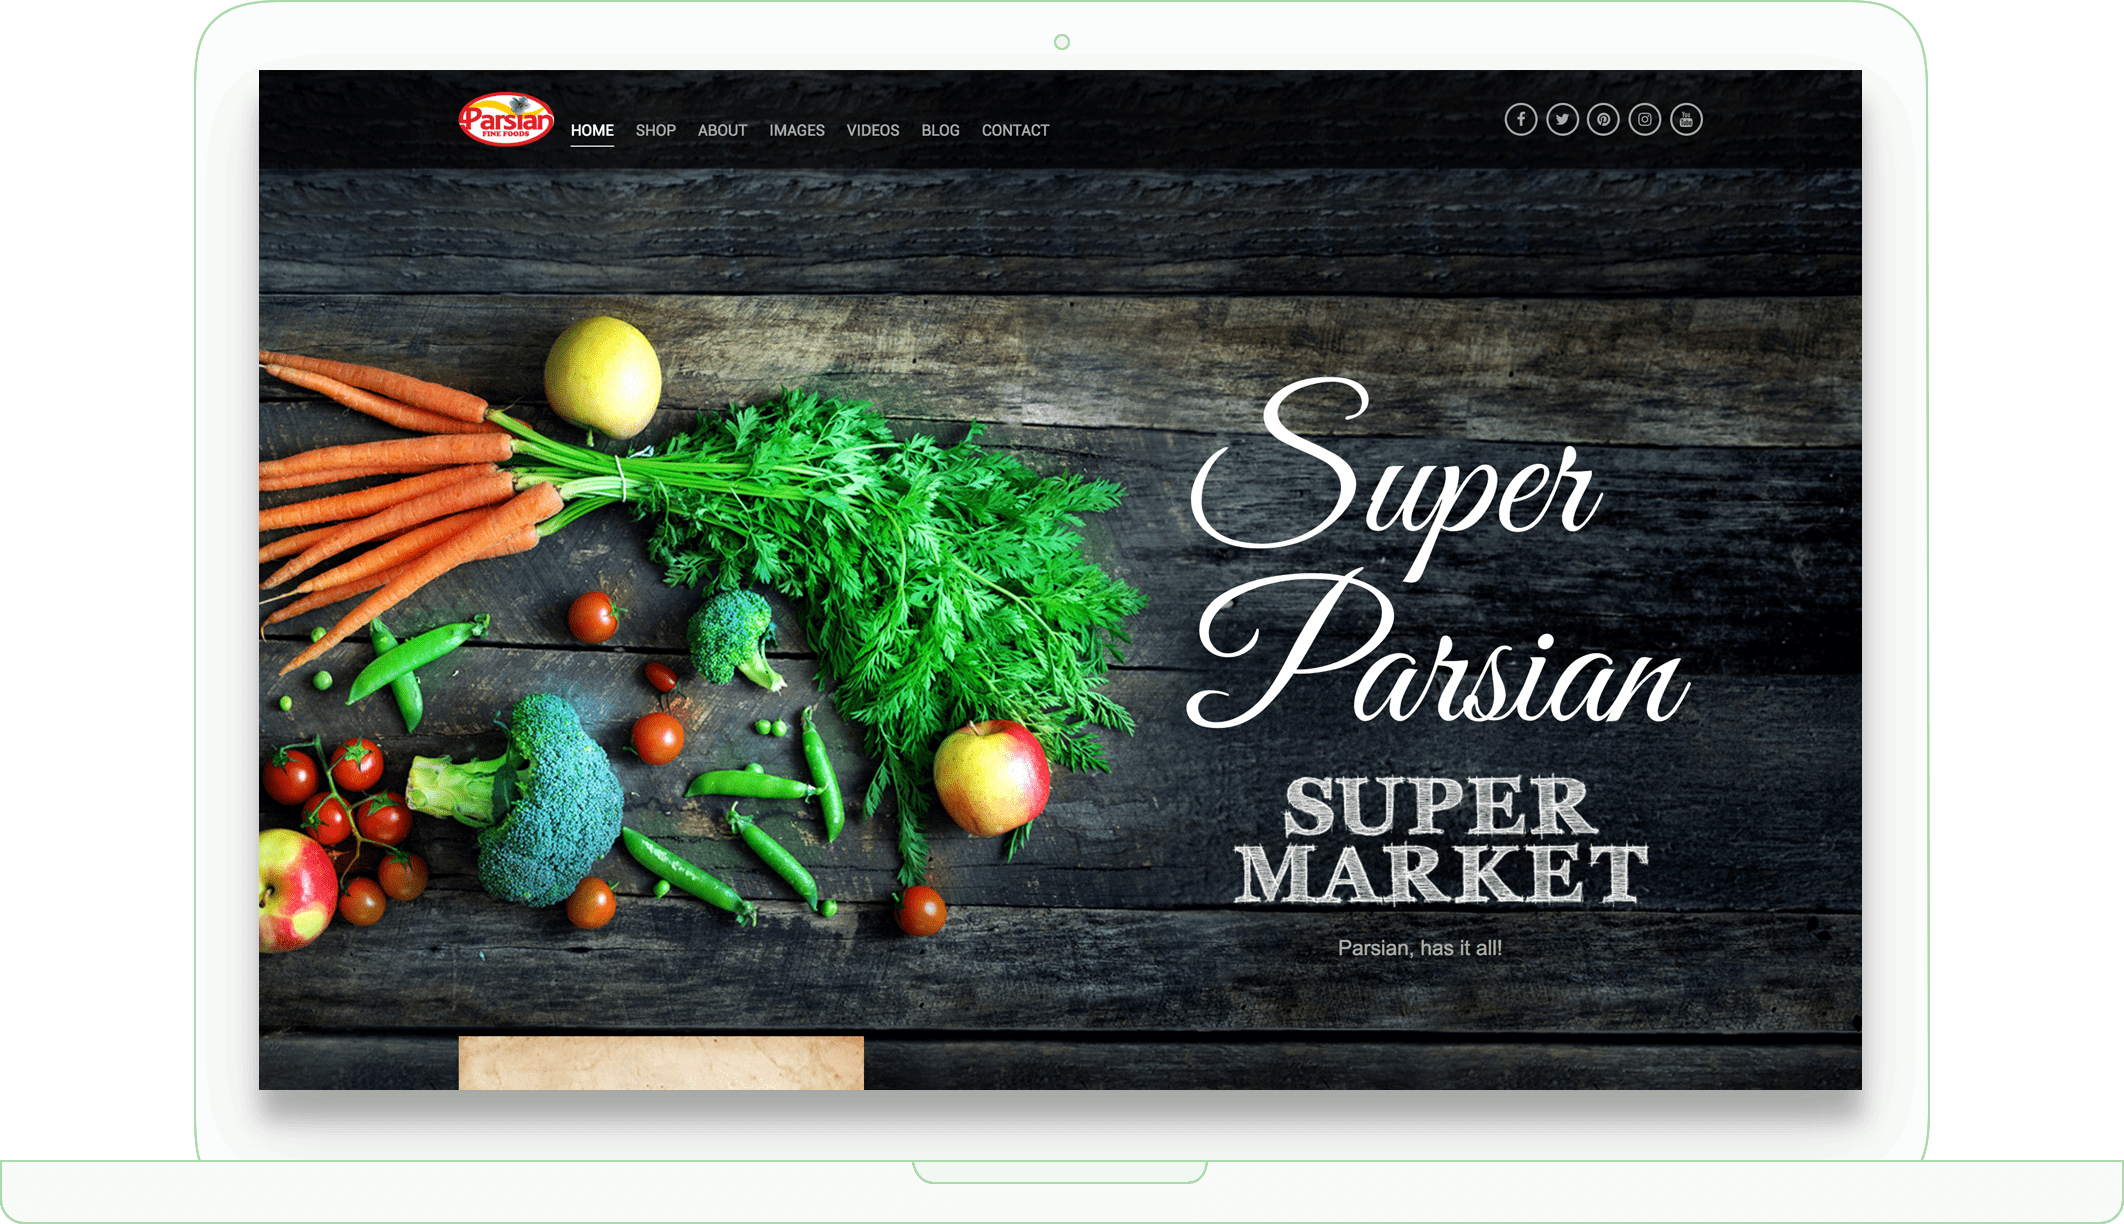 Super Parsian Website Design